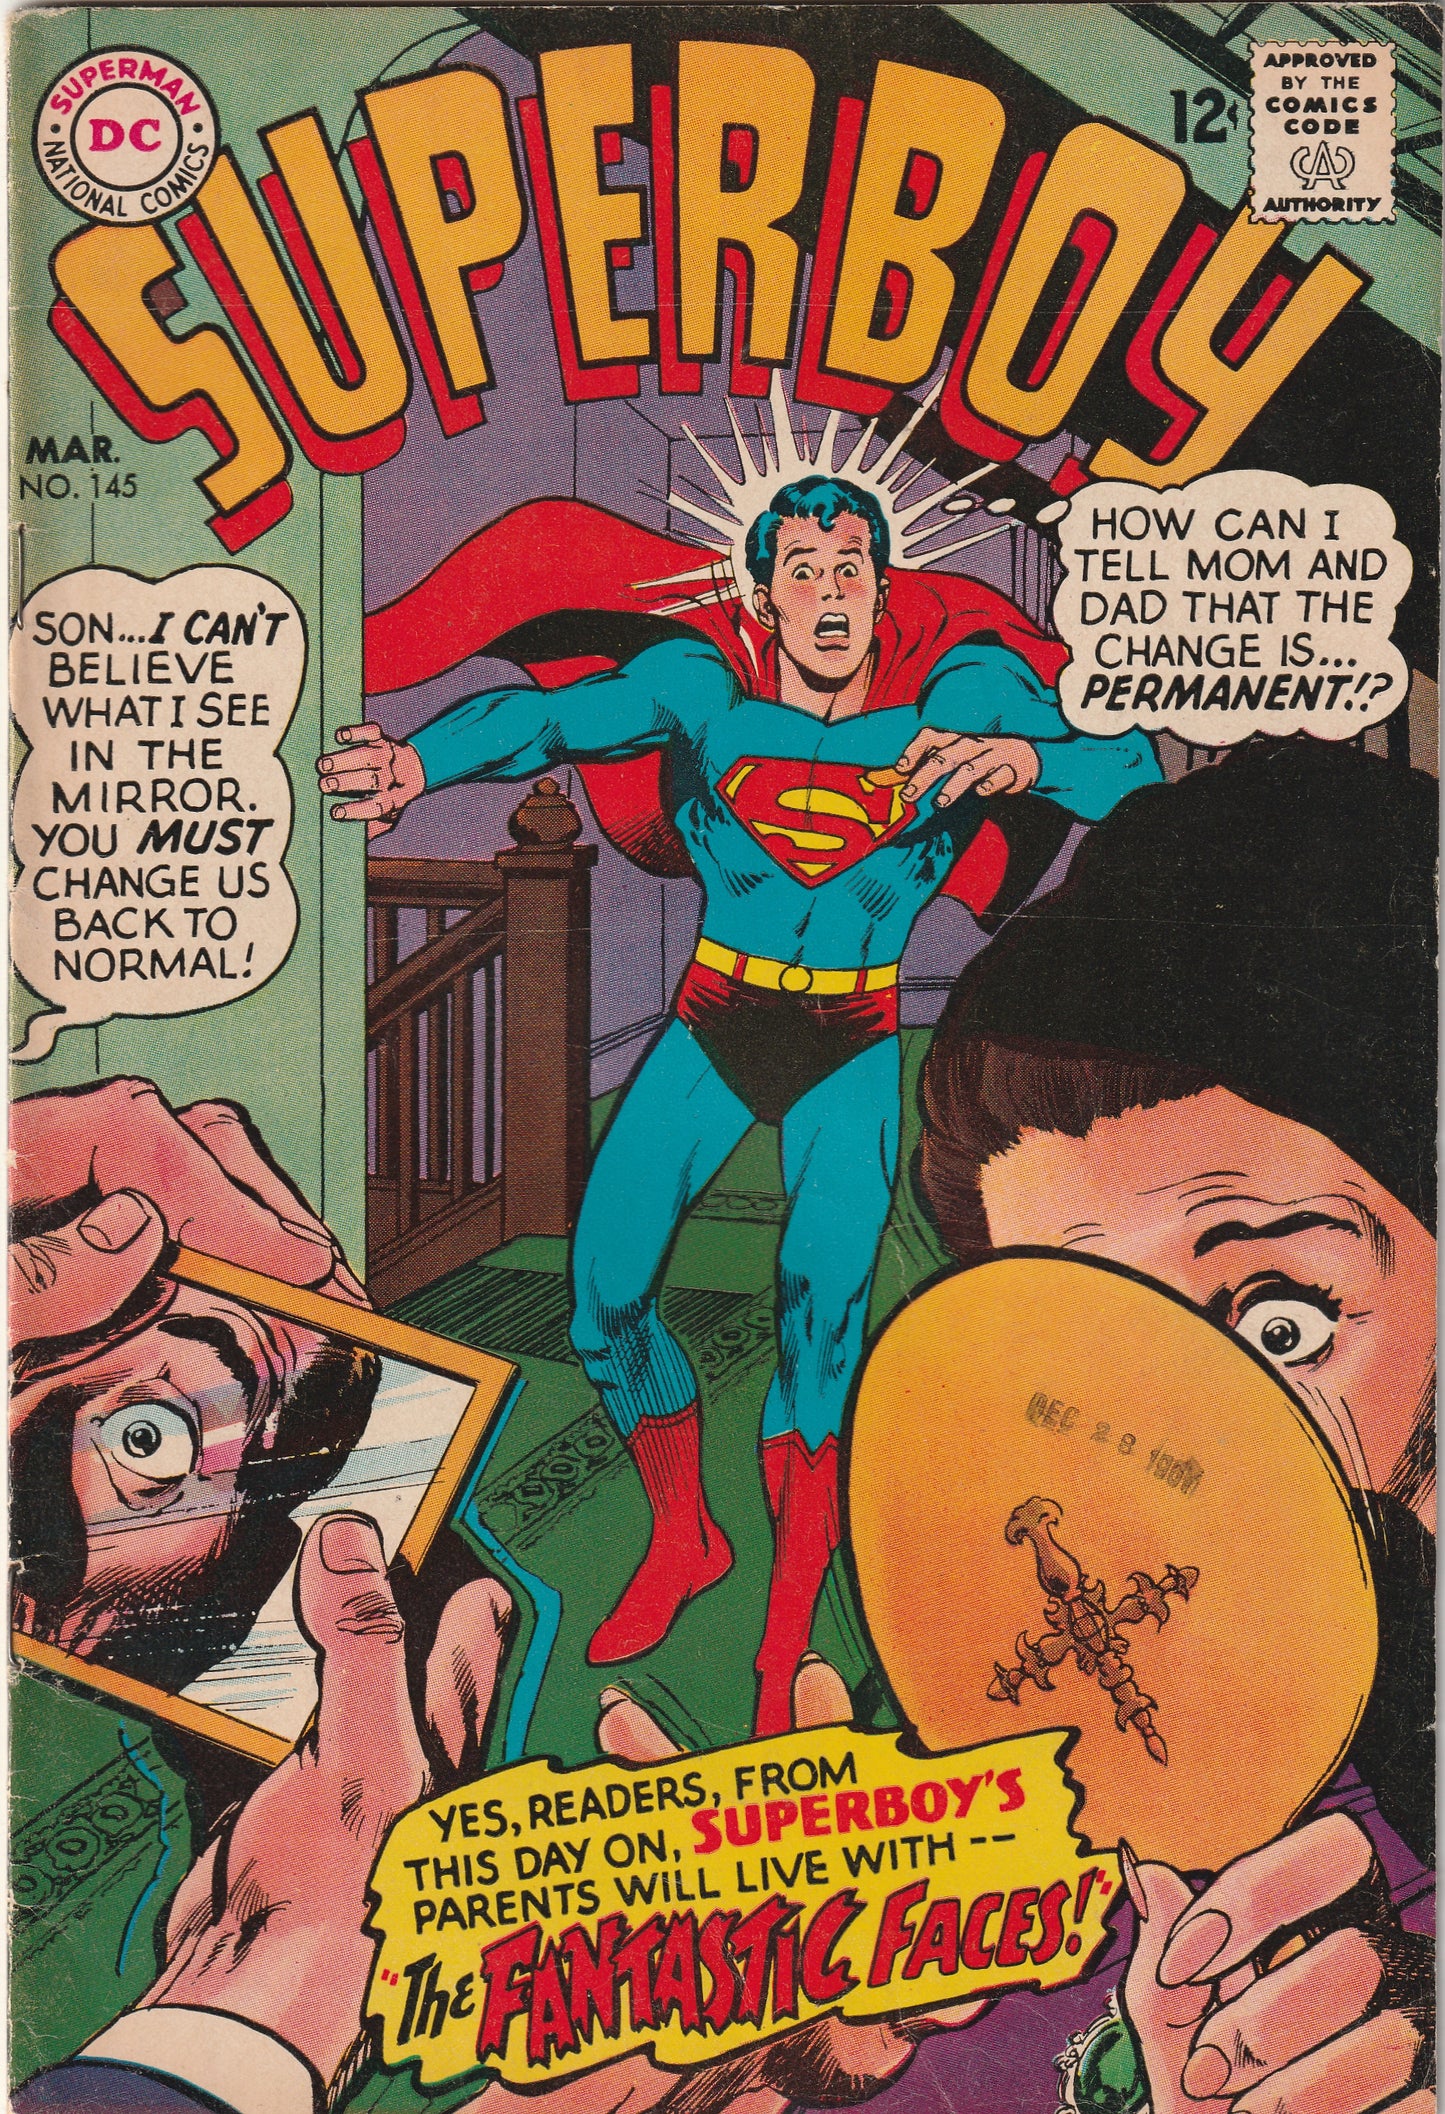 Superboy #145 (1968) - Superboy's parents regain their youth